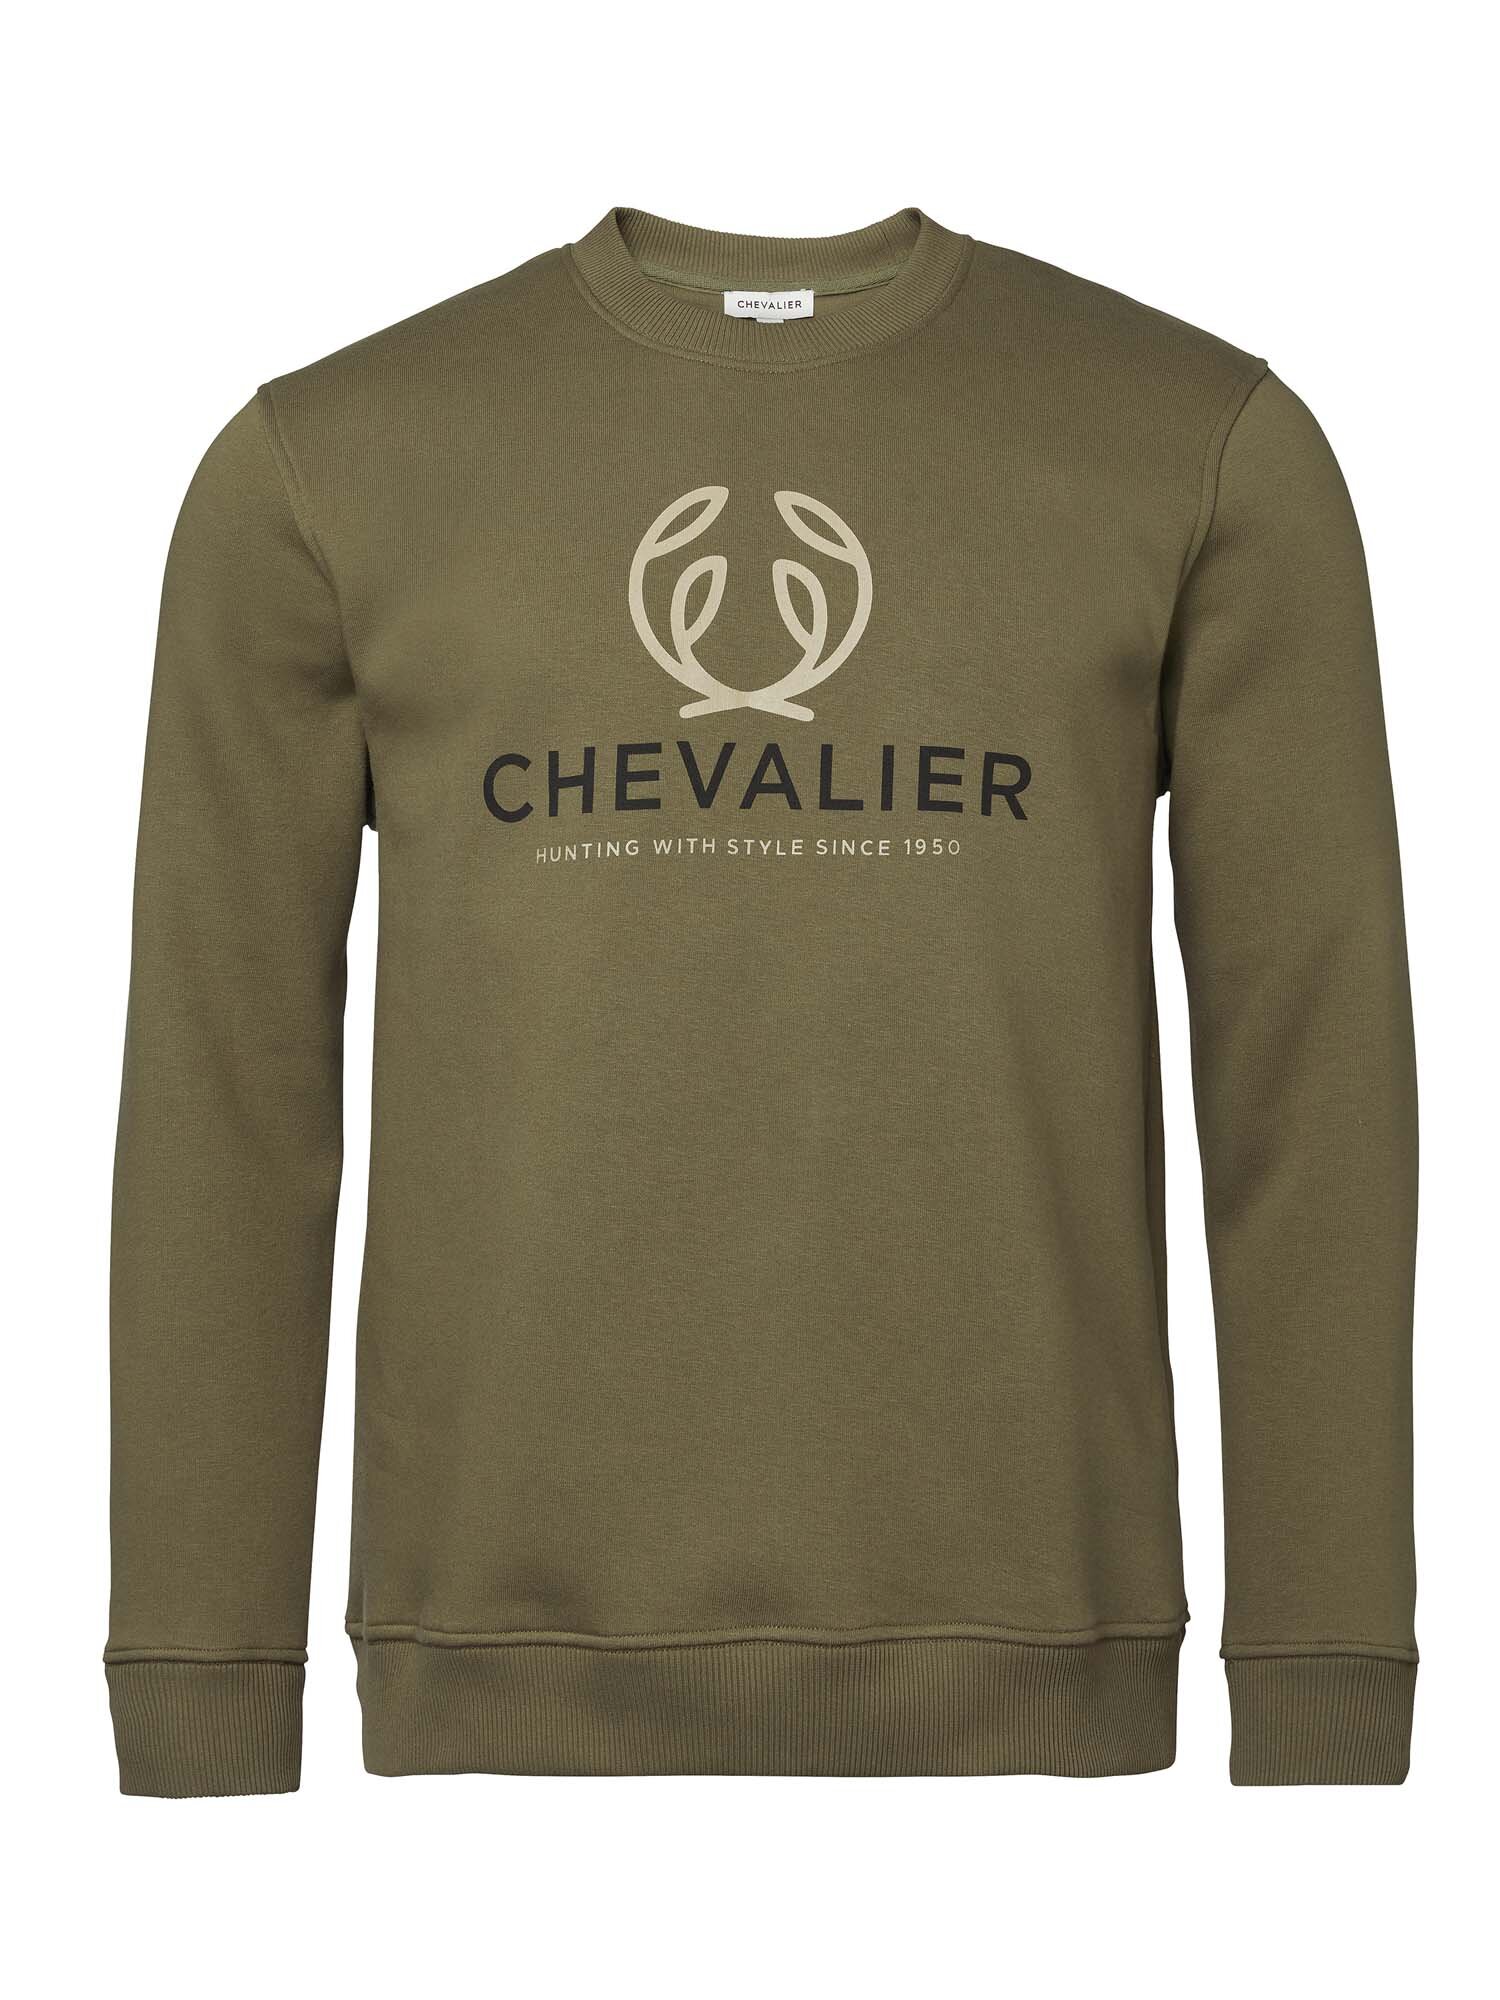 Select Chevalier Logo Sweatshirt Men